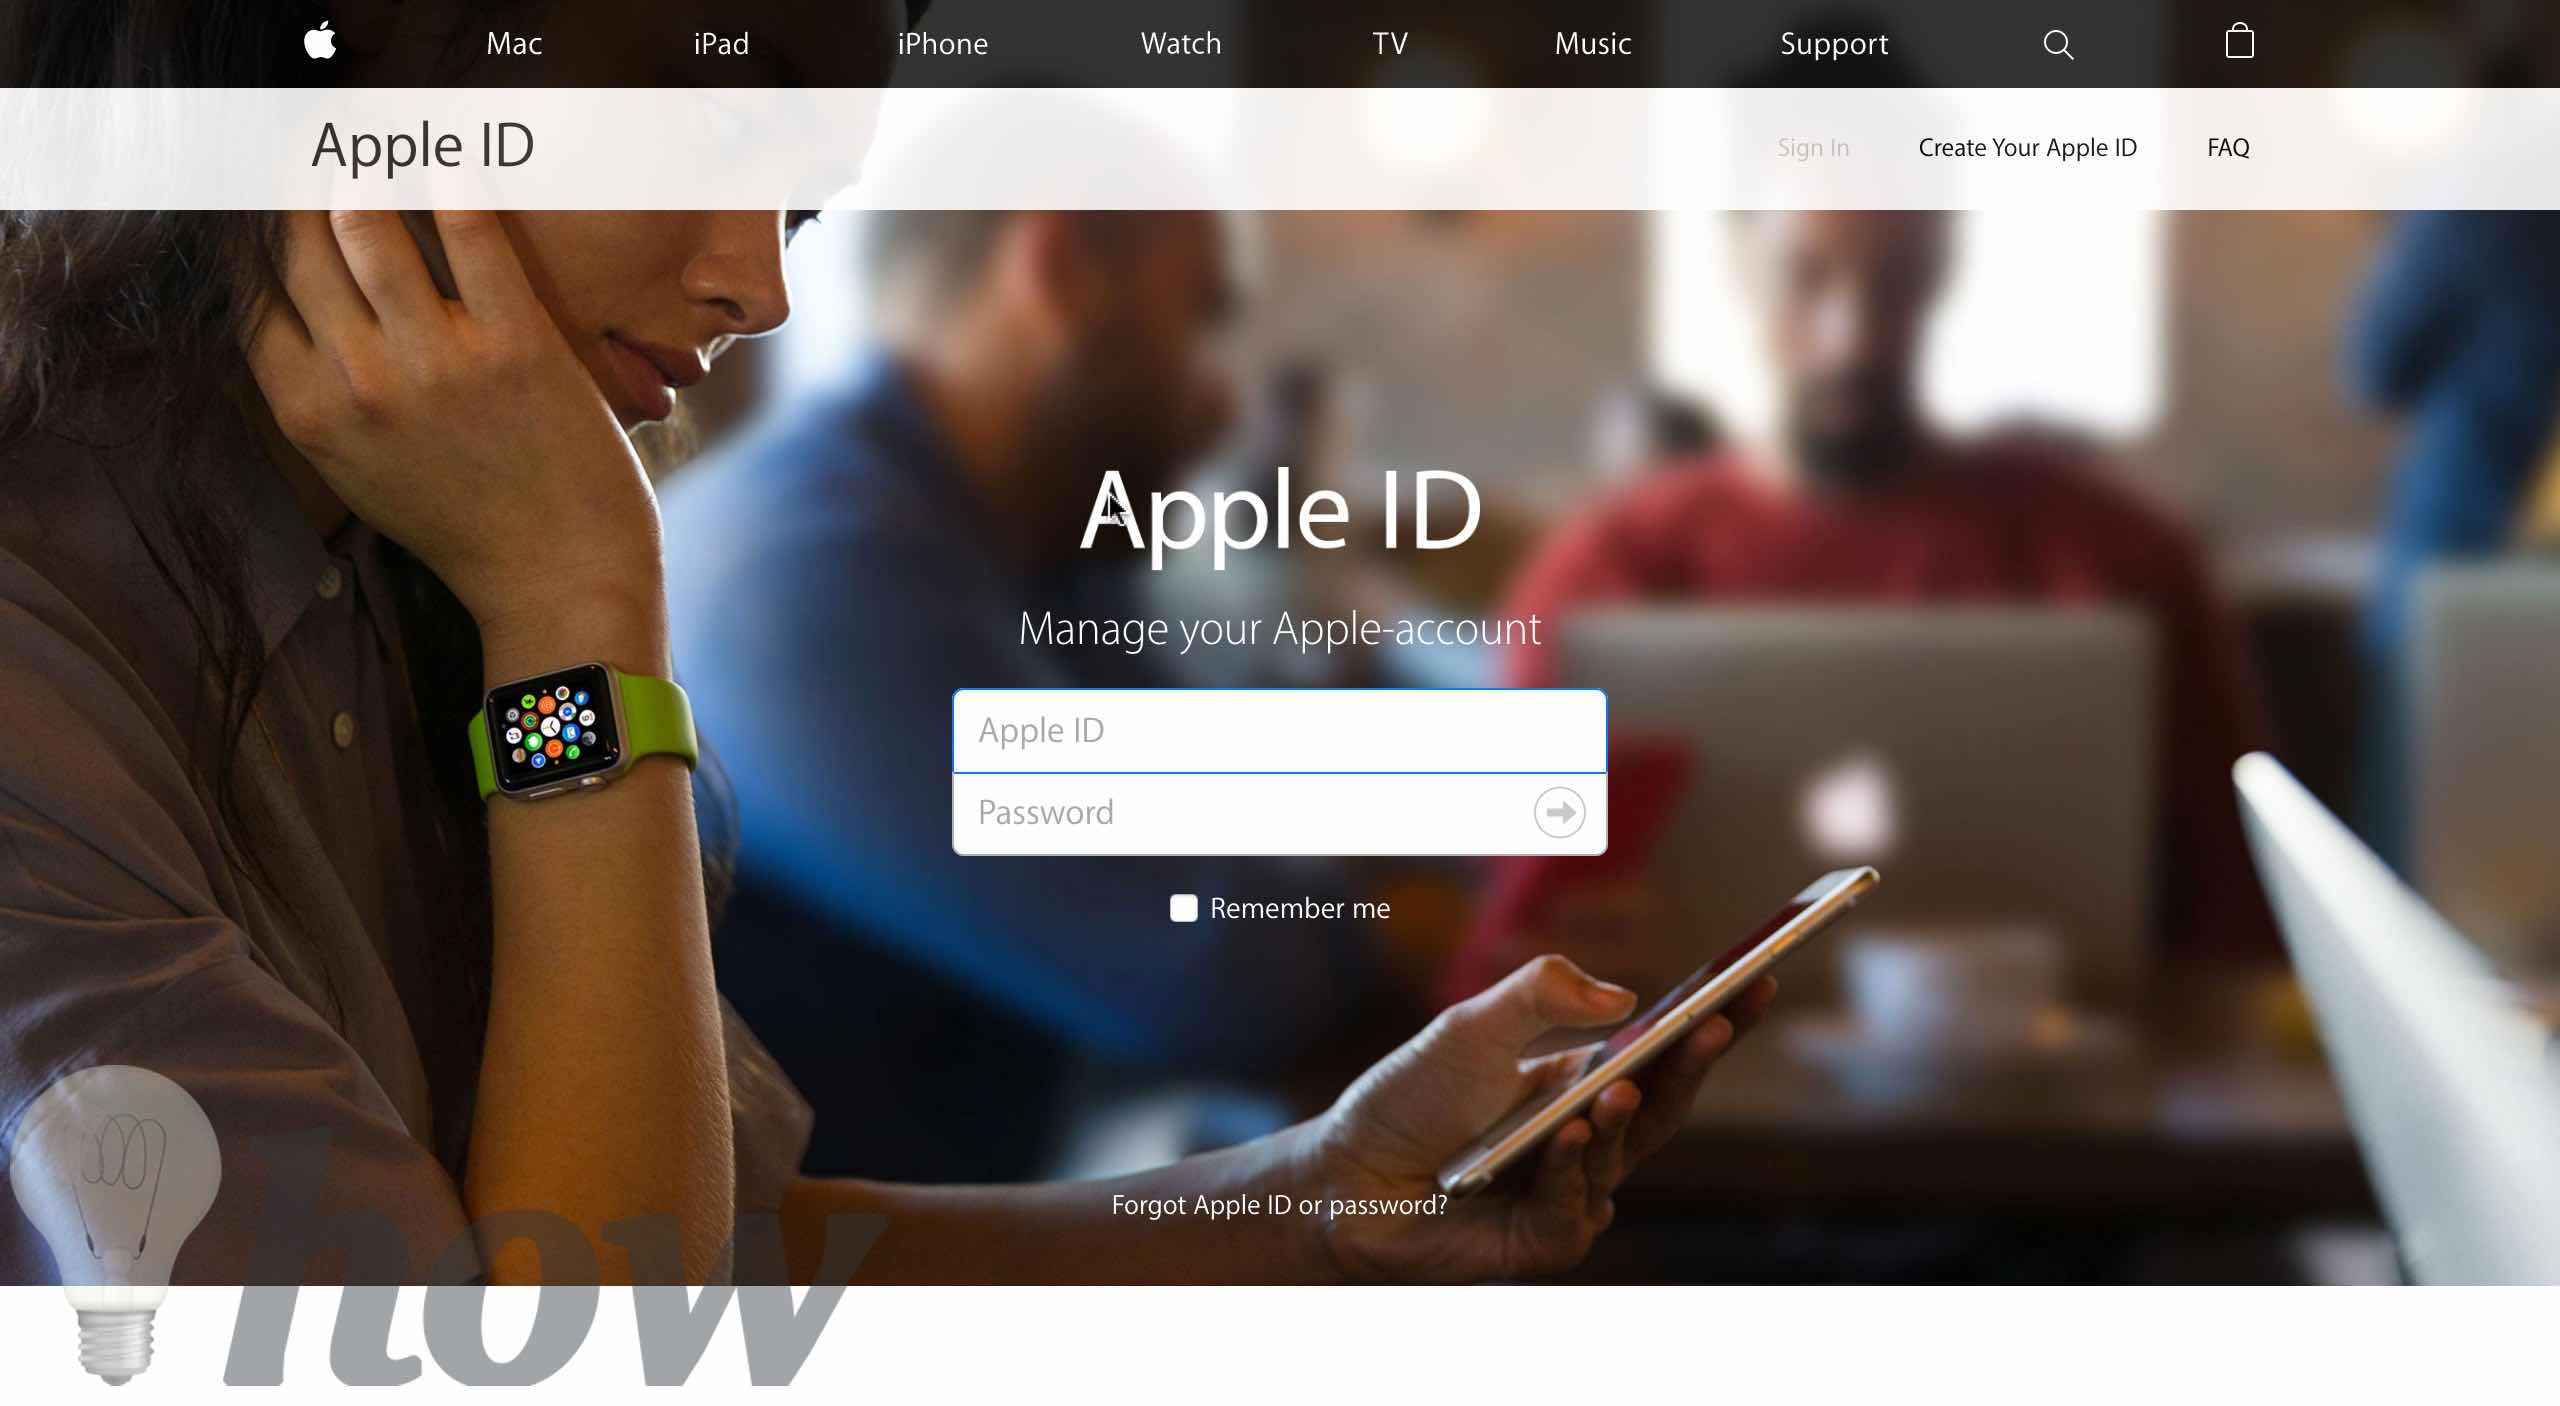 Change Your Apple ID Password